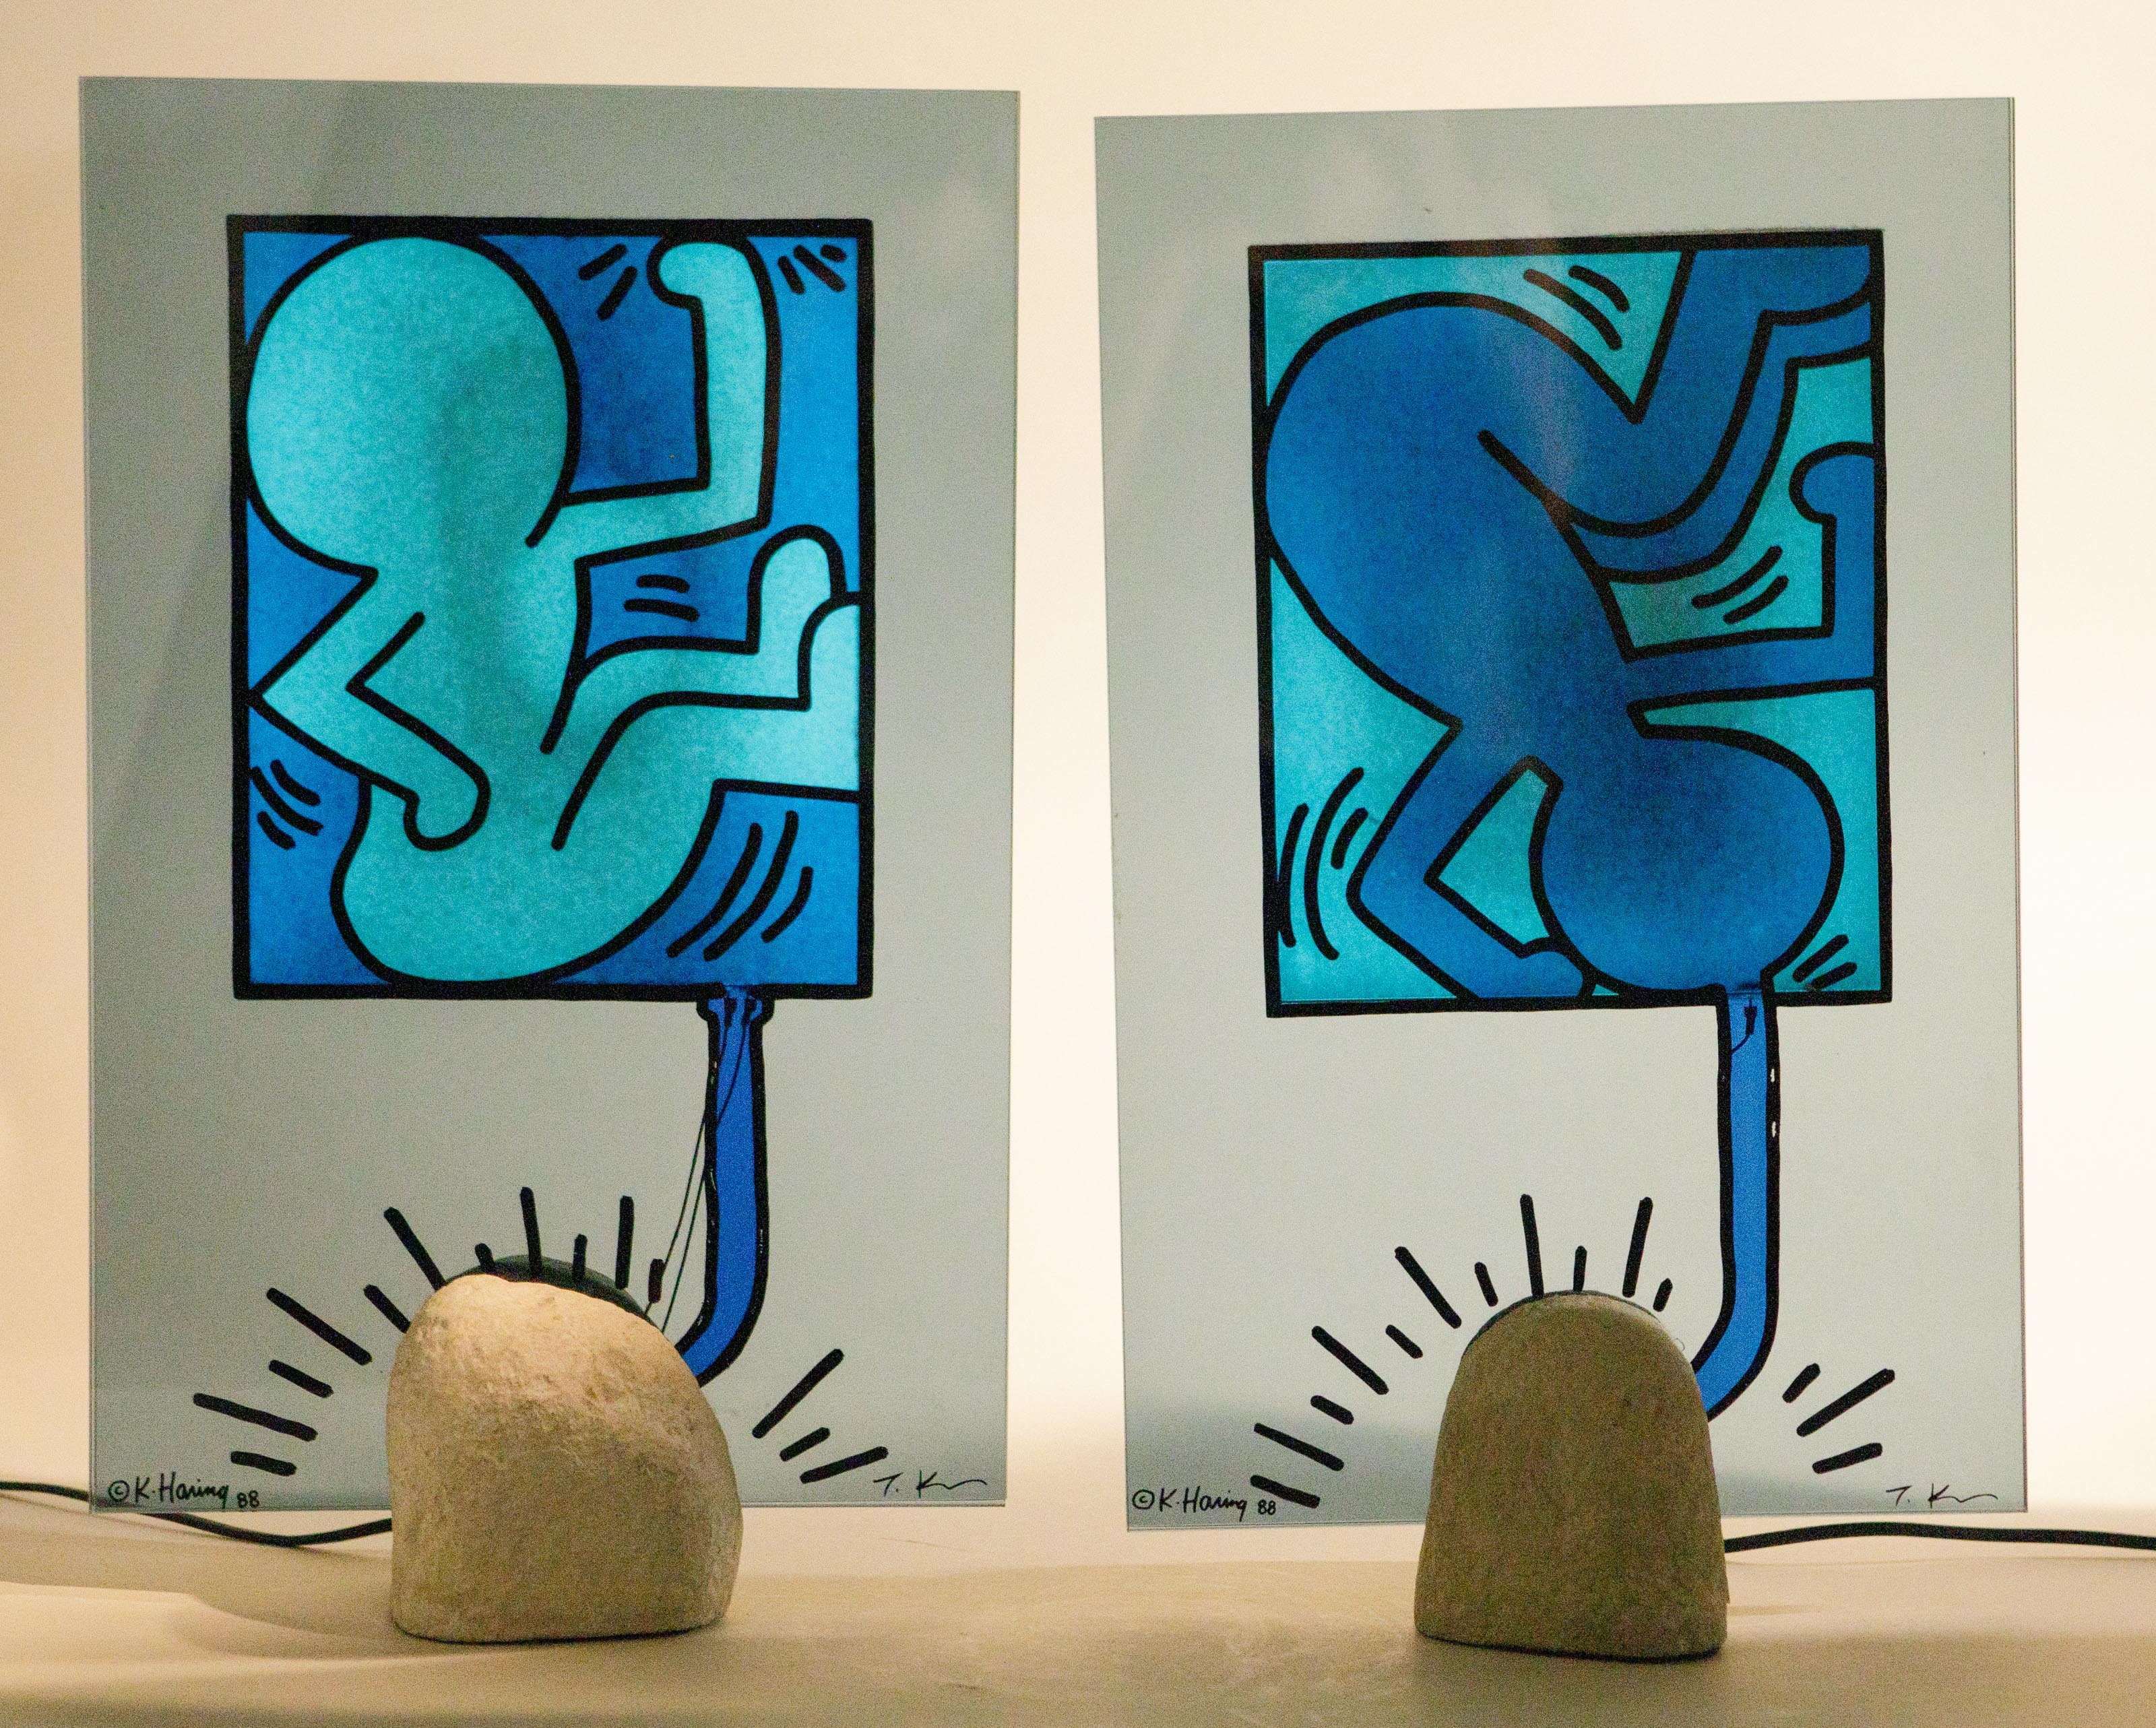 Artwork by Toshiyuki Kita, Keith Haring, Pair of table lamps, model 'On Taro' & 'On Giro', Made of Screen print